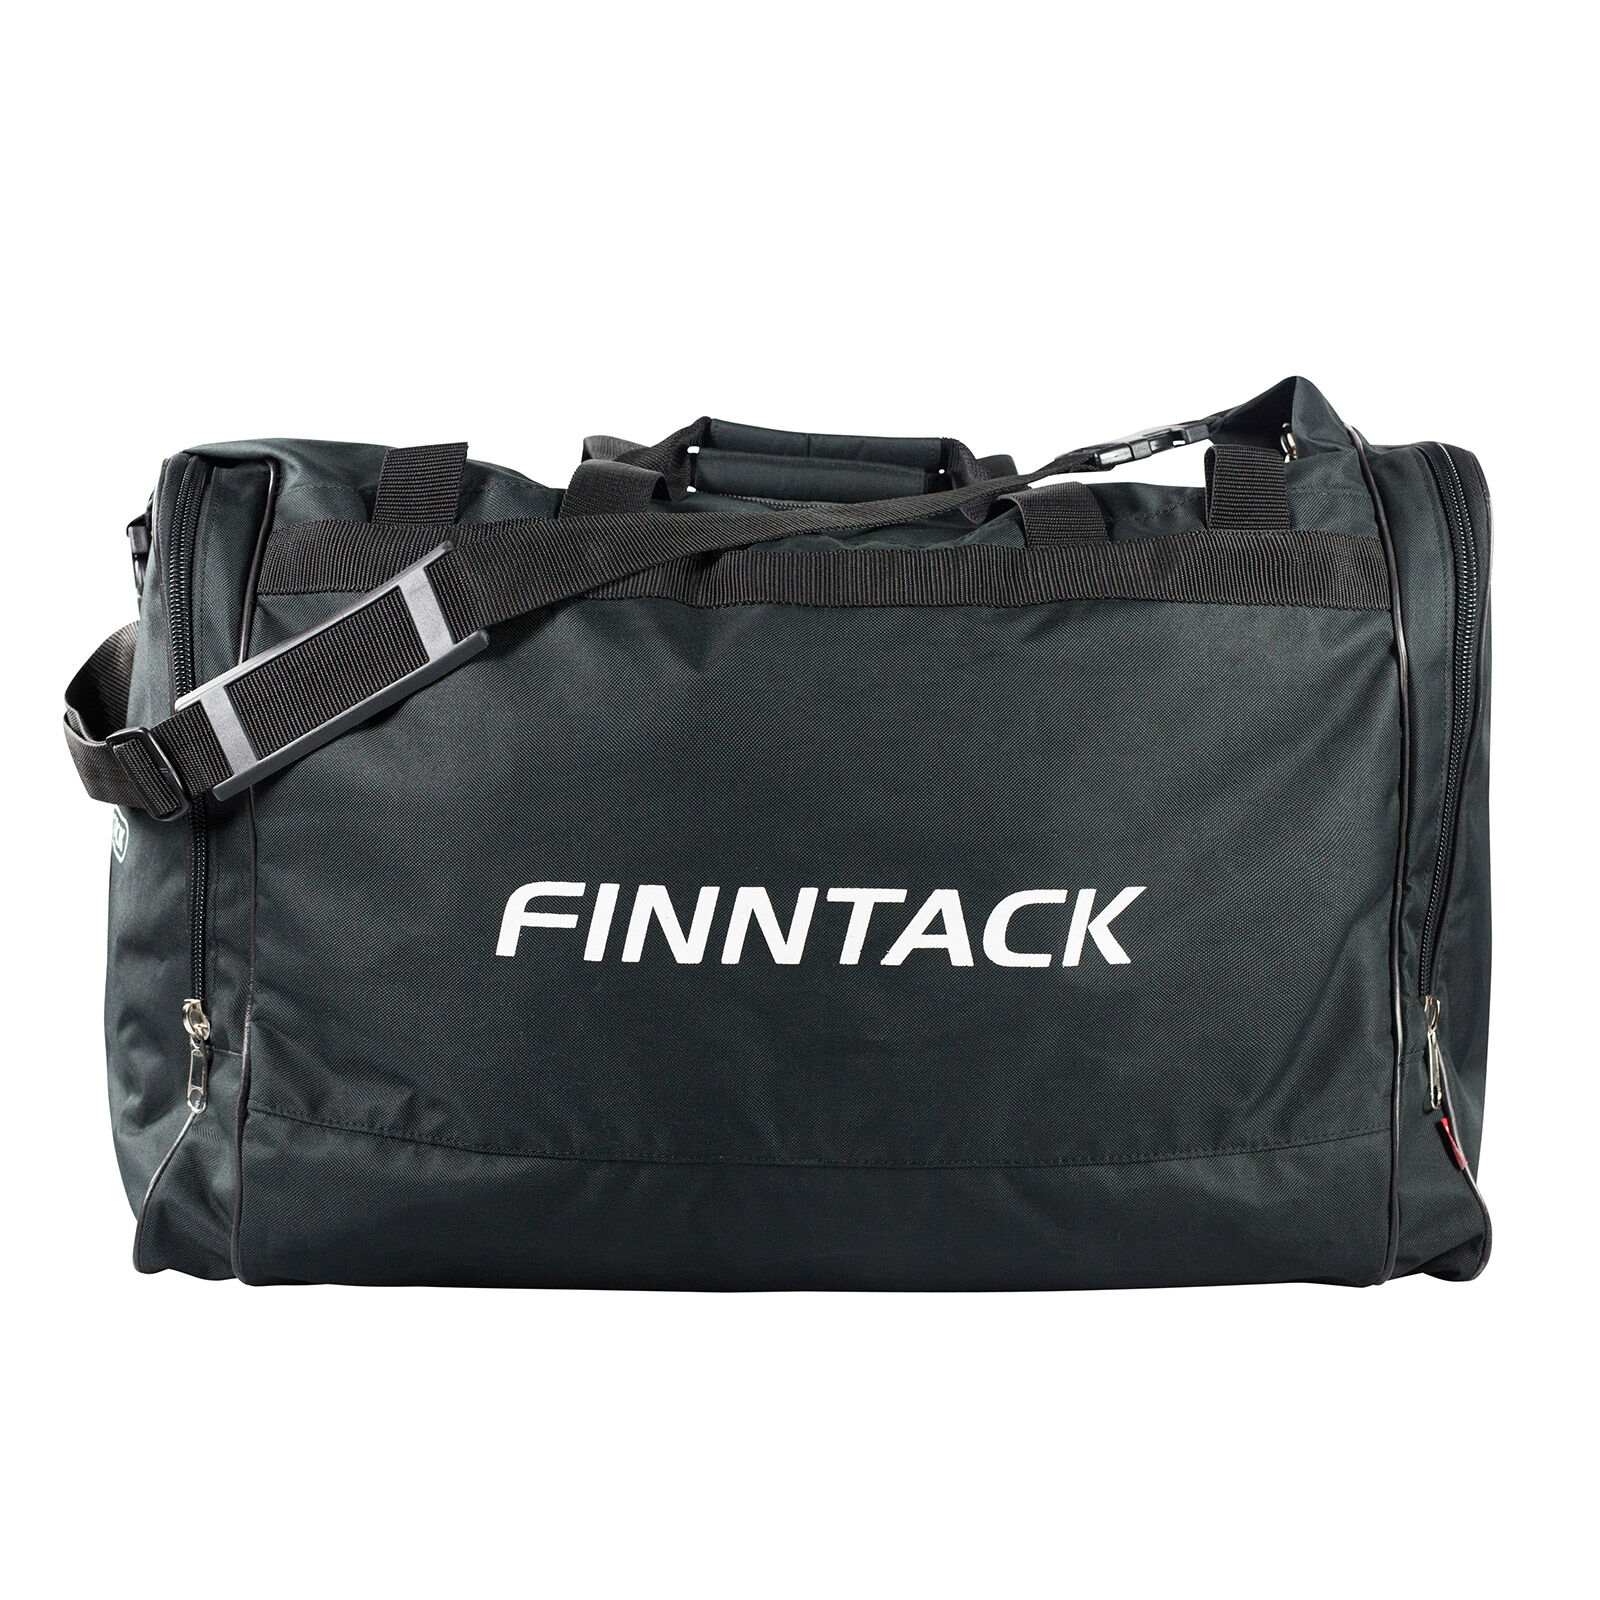 Jockey Gym Sports Book Bag One Shoulder Backpack Lightweight School Tote  Black | eBay